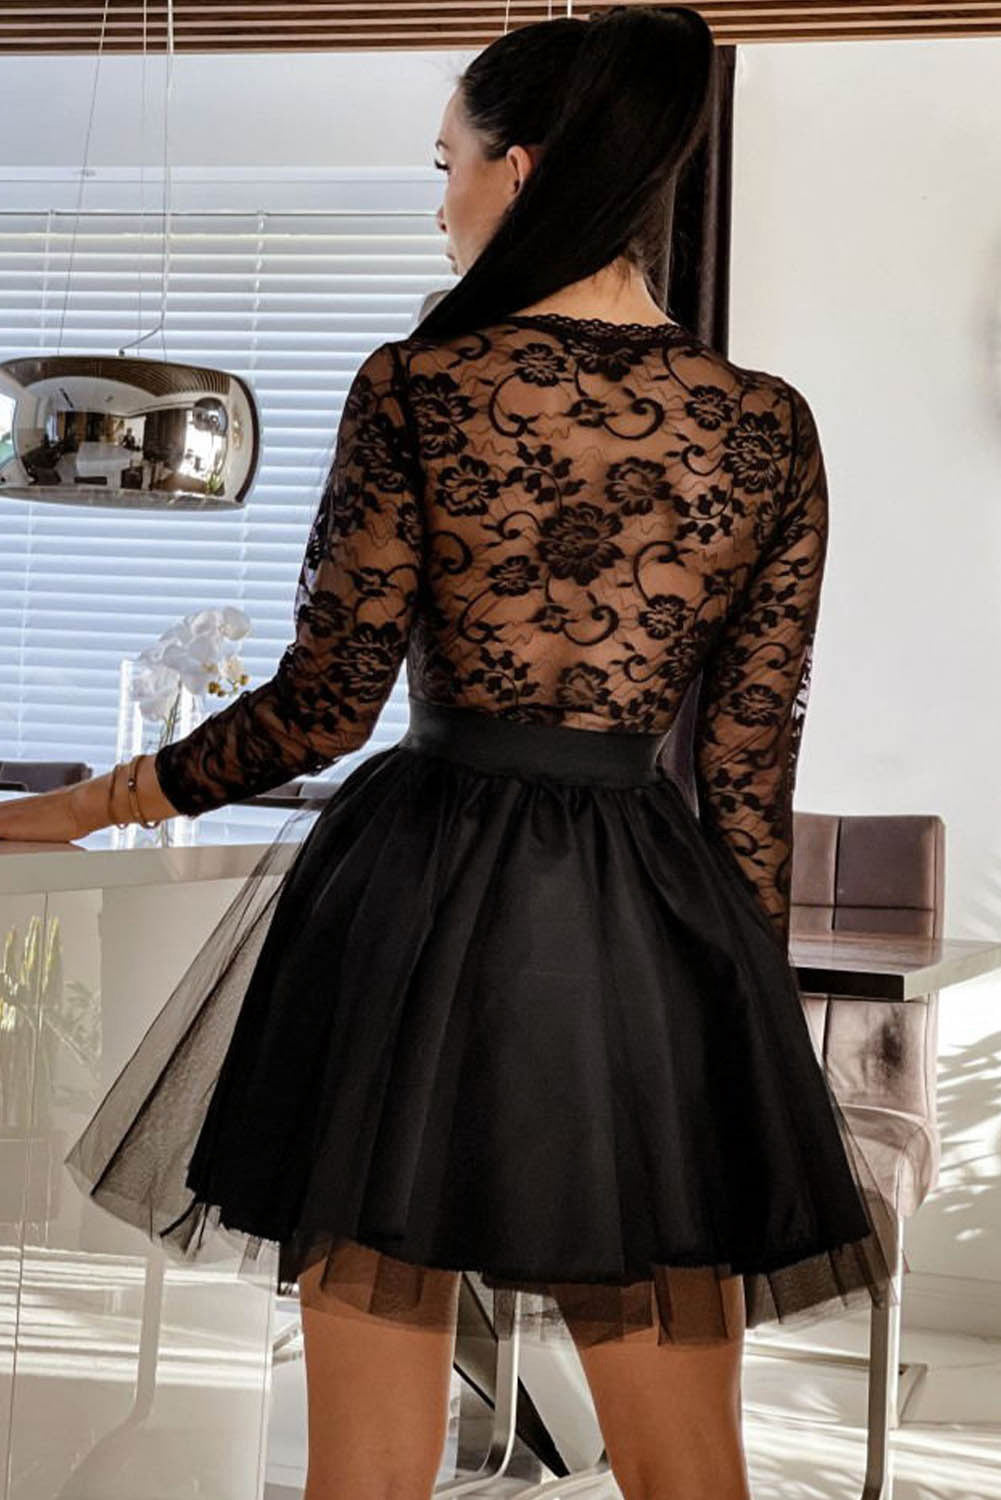 Black Sheer Lace Flare Sleeve High Neck Mini Dress